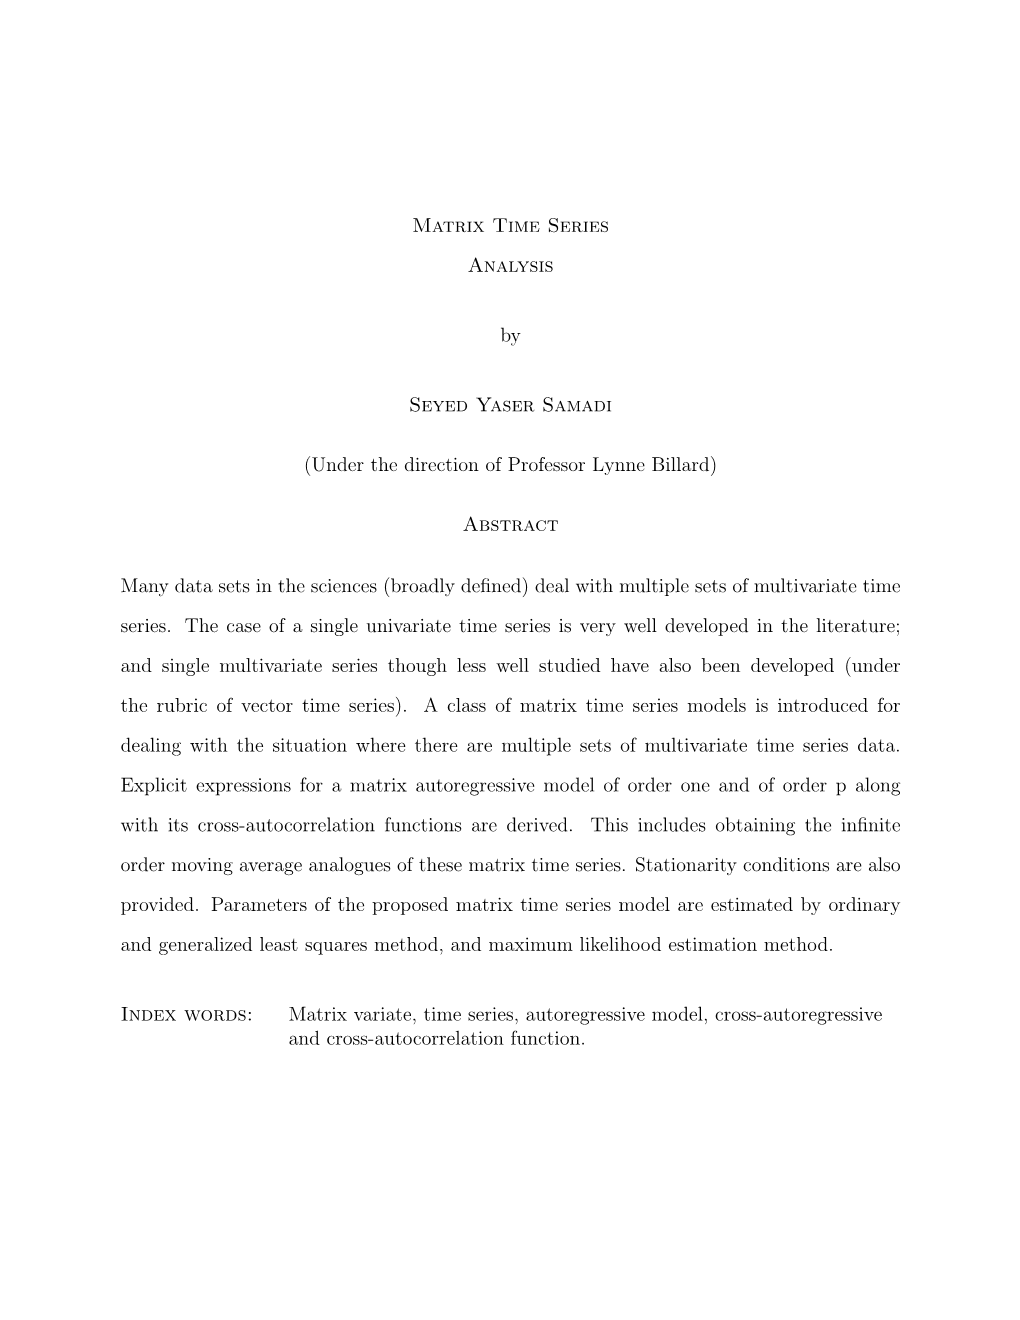 Matrix Time Series Analysis by Seyed Yaser Samadi (Under the Direction of Professor Lynne Billard)